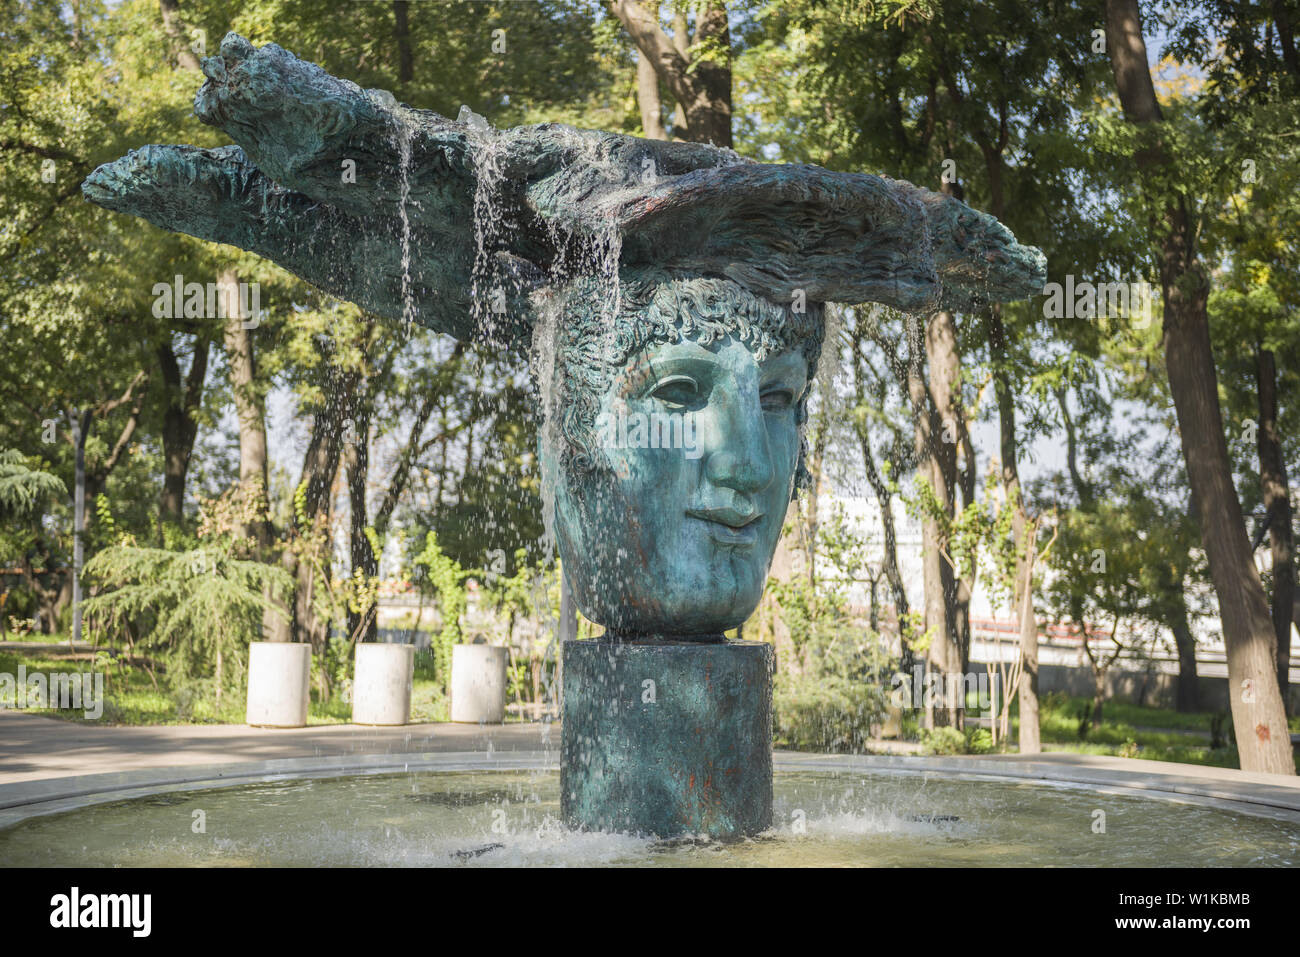 Fountain 'Theatrical mask' in Greek Park, Primorsky Boulevard, Odessa, Ukraine, Eastern Europe Stock Photo